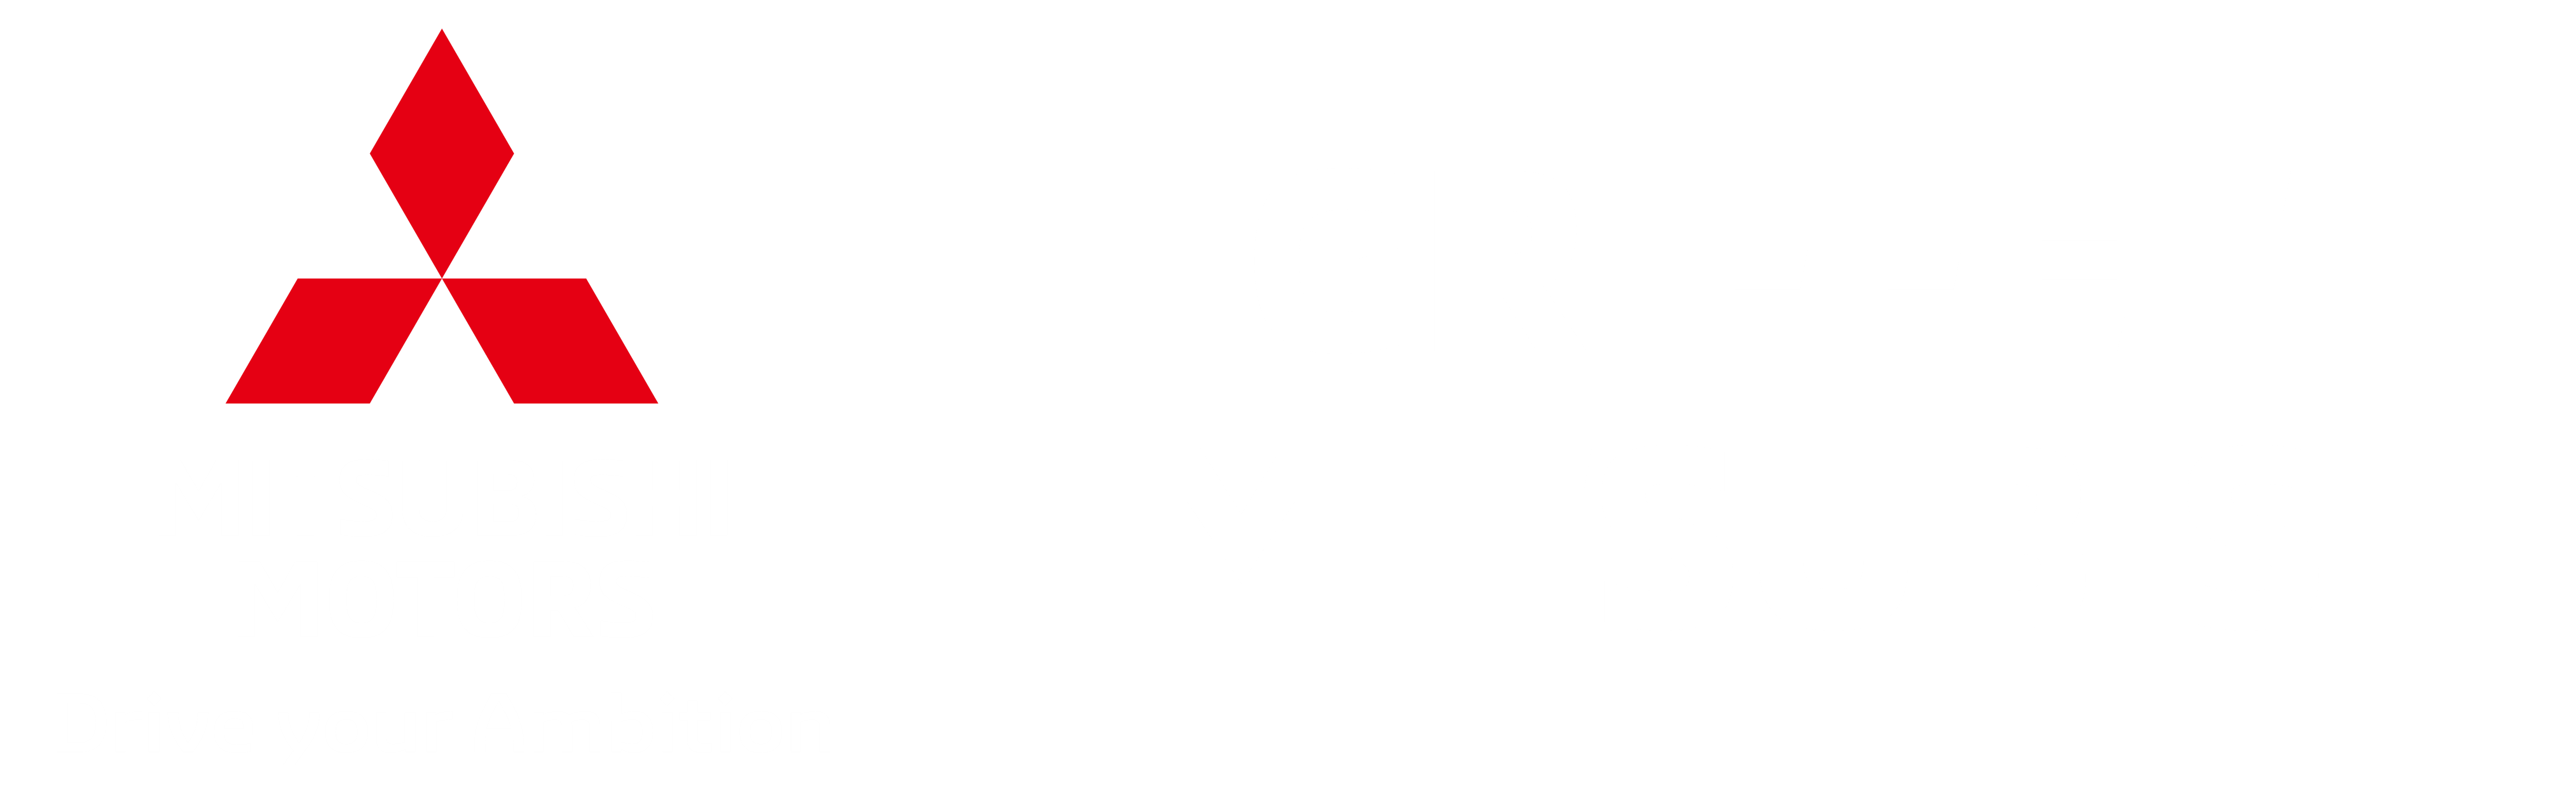 GRIFFETH MITSUBISHI